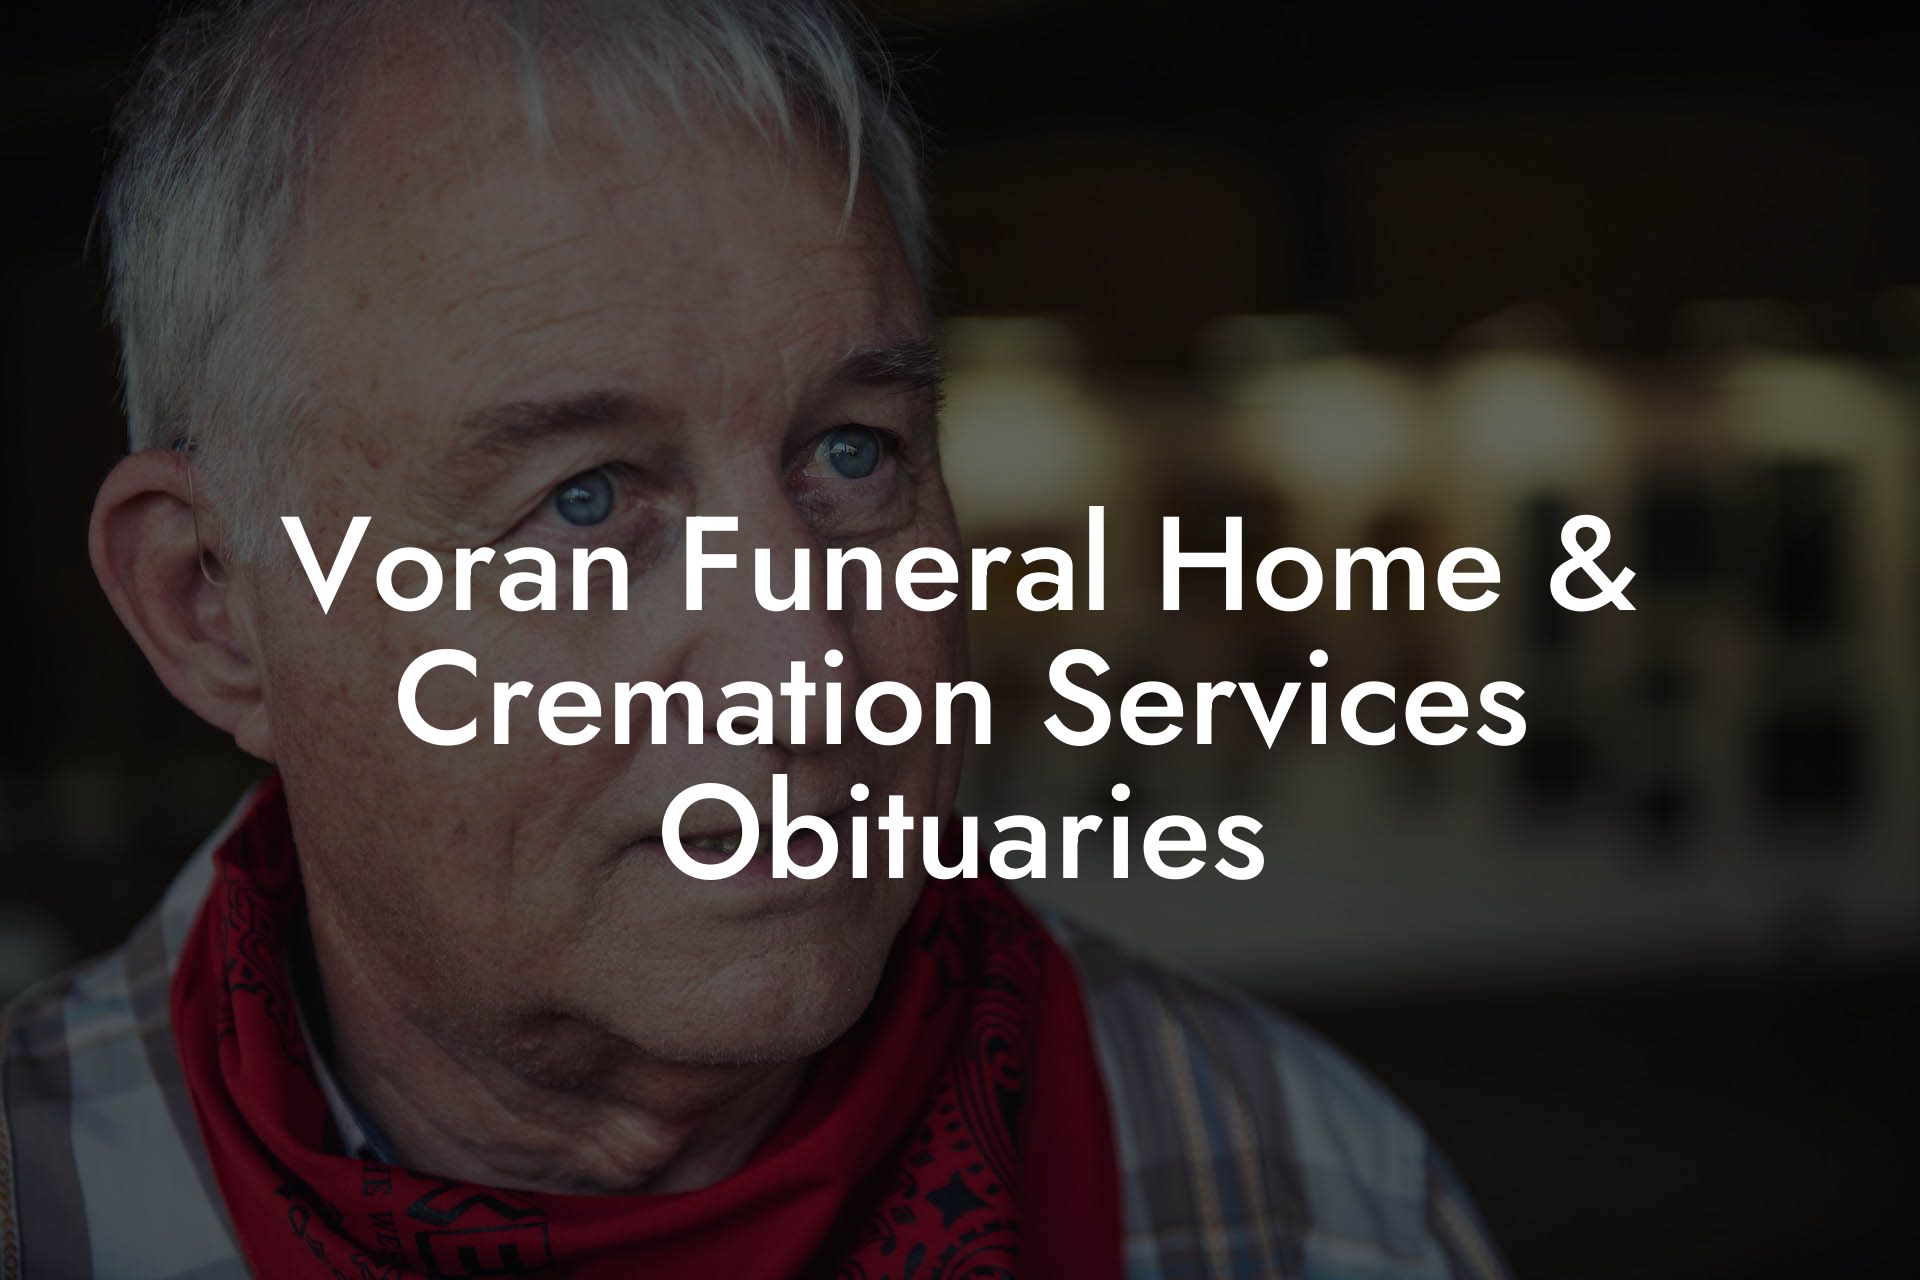 Voran Funeral Home & Cremation Services Obituaries - Eulogy Assistant